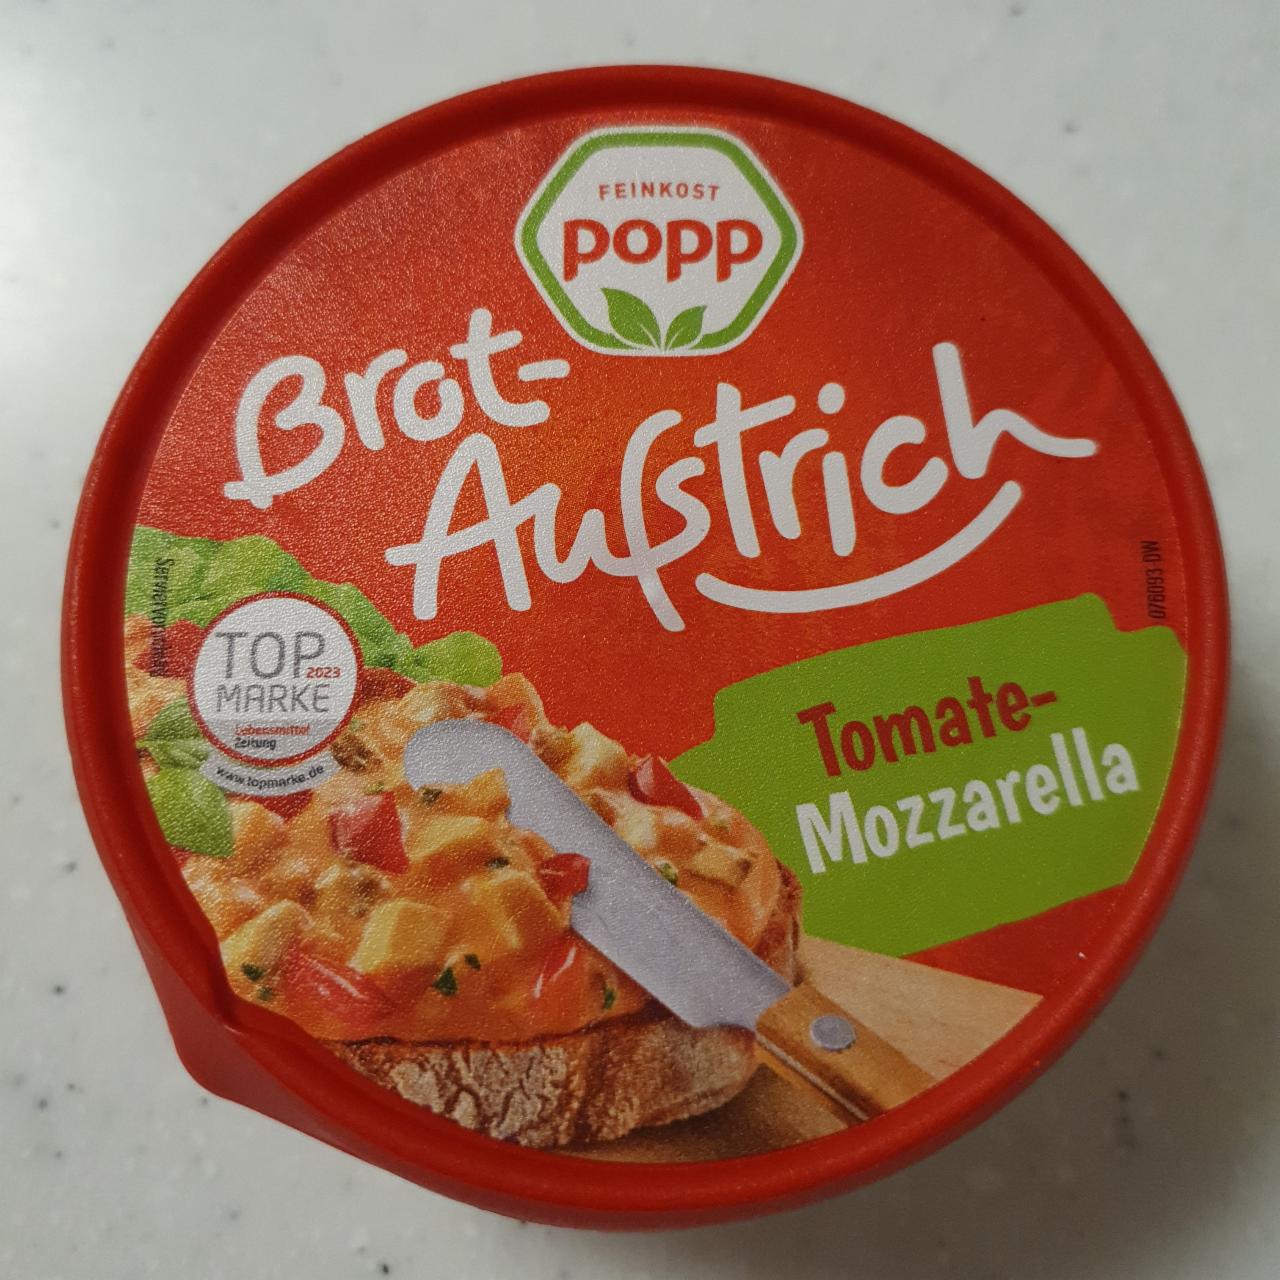 Fotografie - BrotAufstrich Tomate-Mozzarella Feinkost Popp